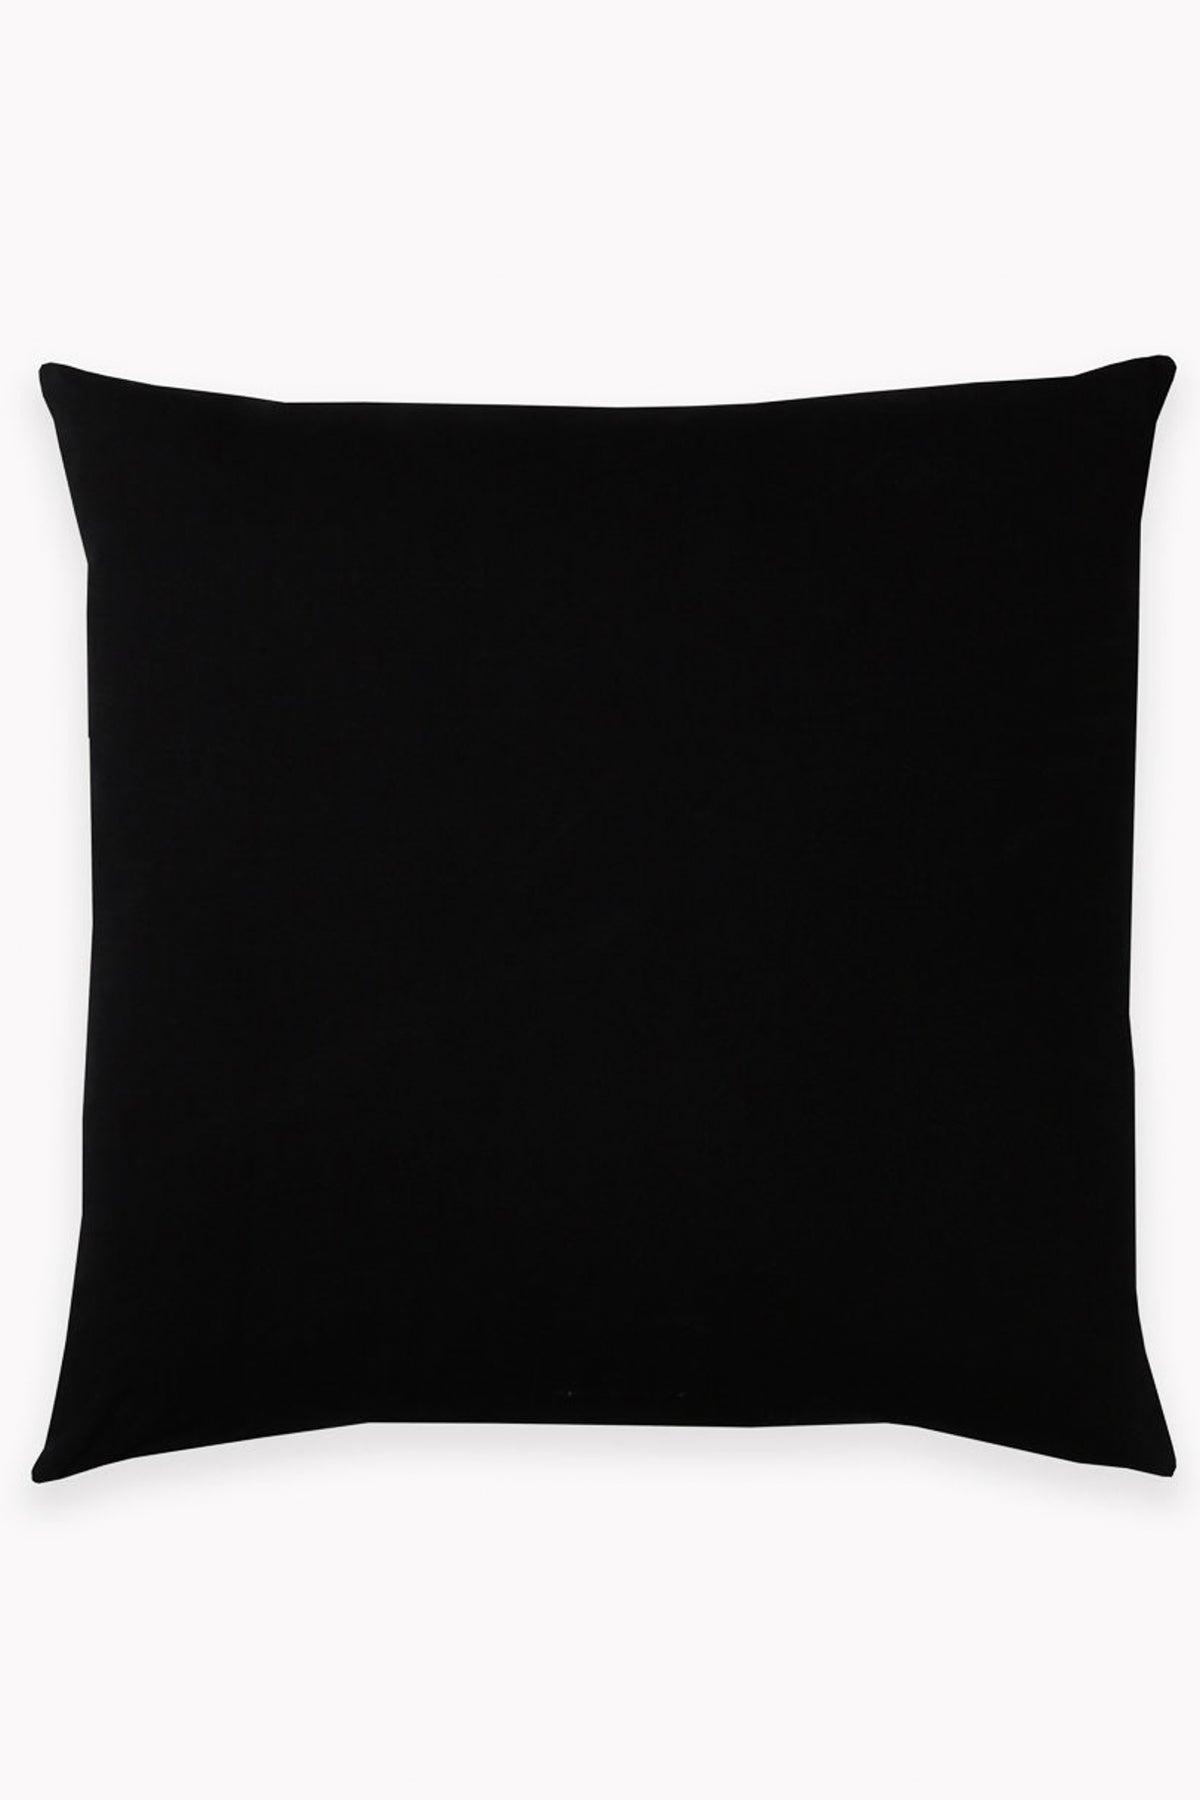 Anchal Project Medium Naari Throw Pillow Cover